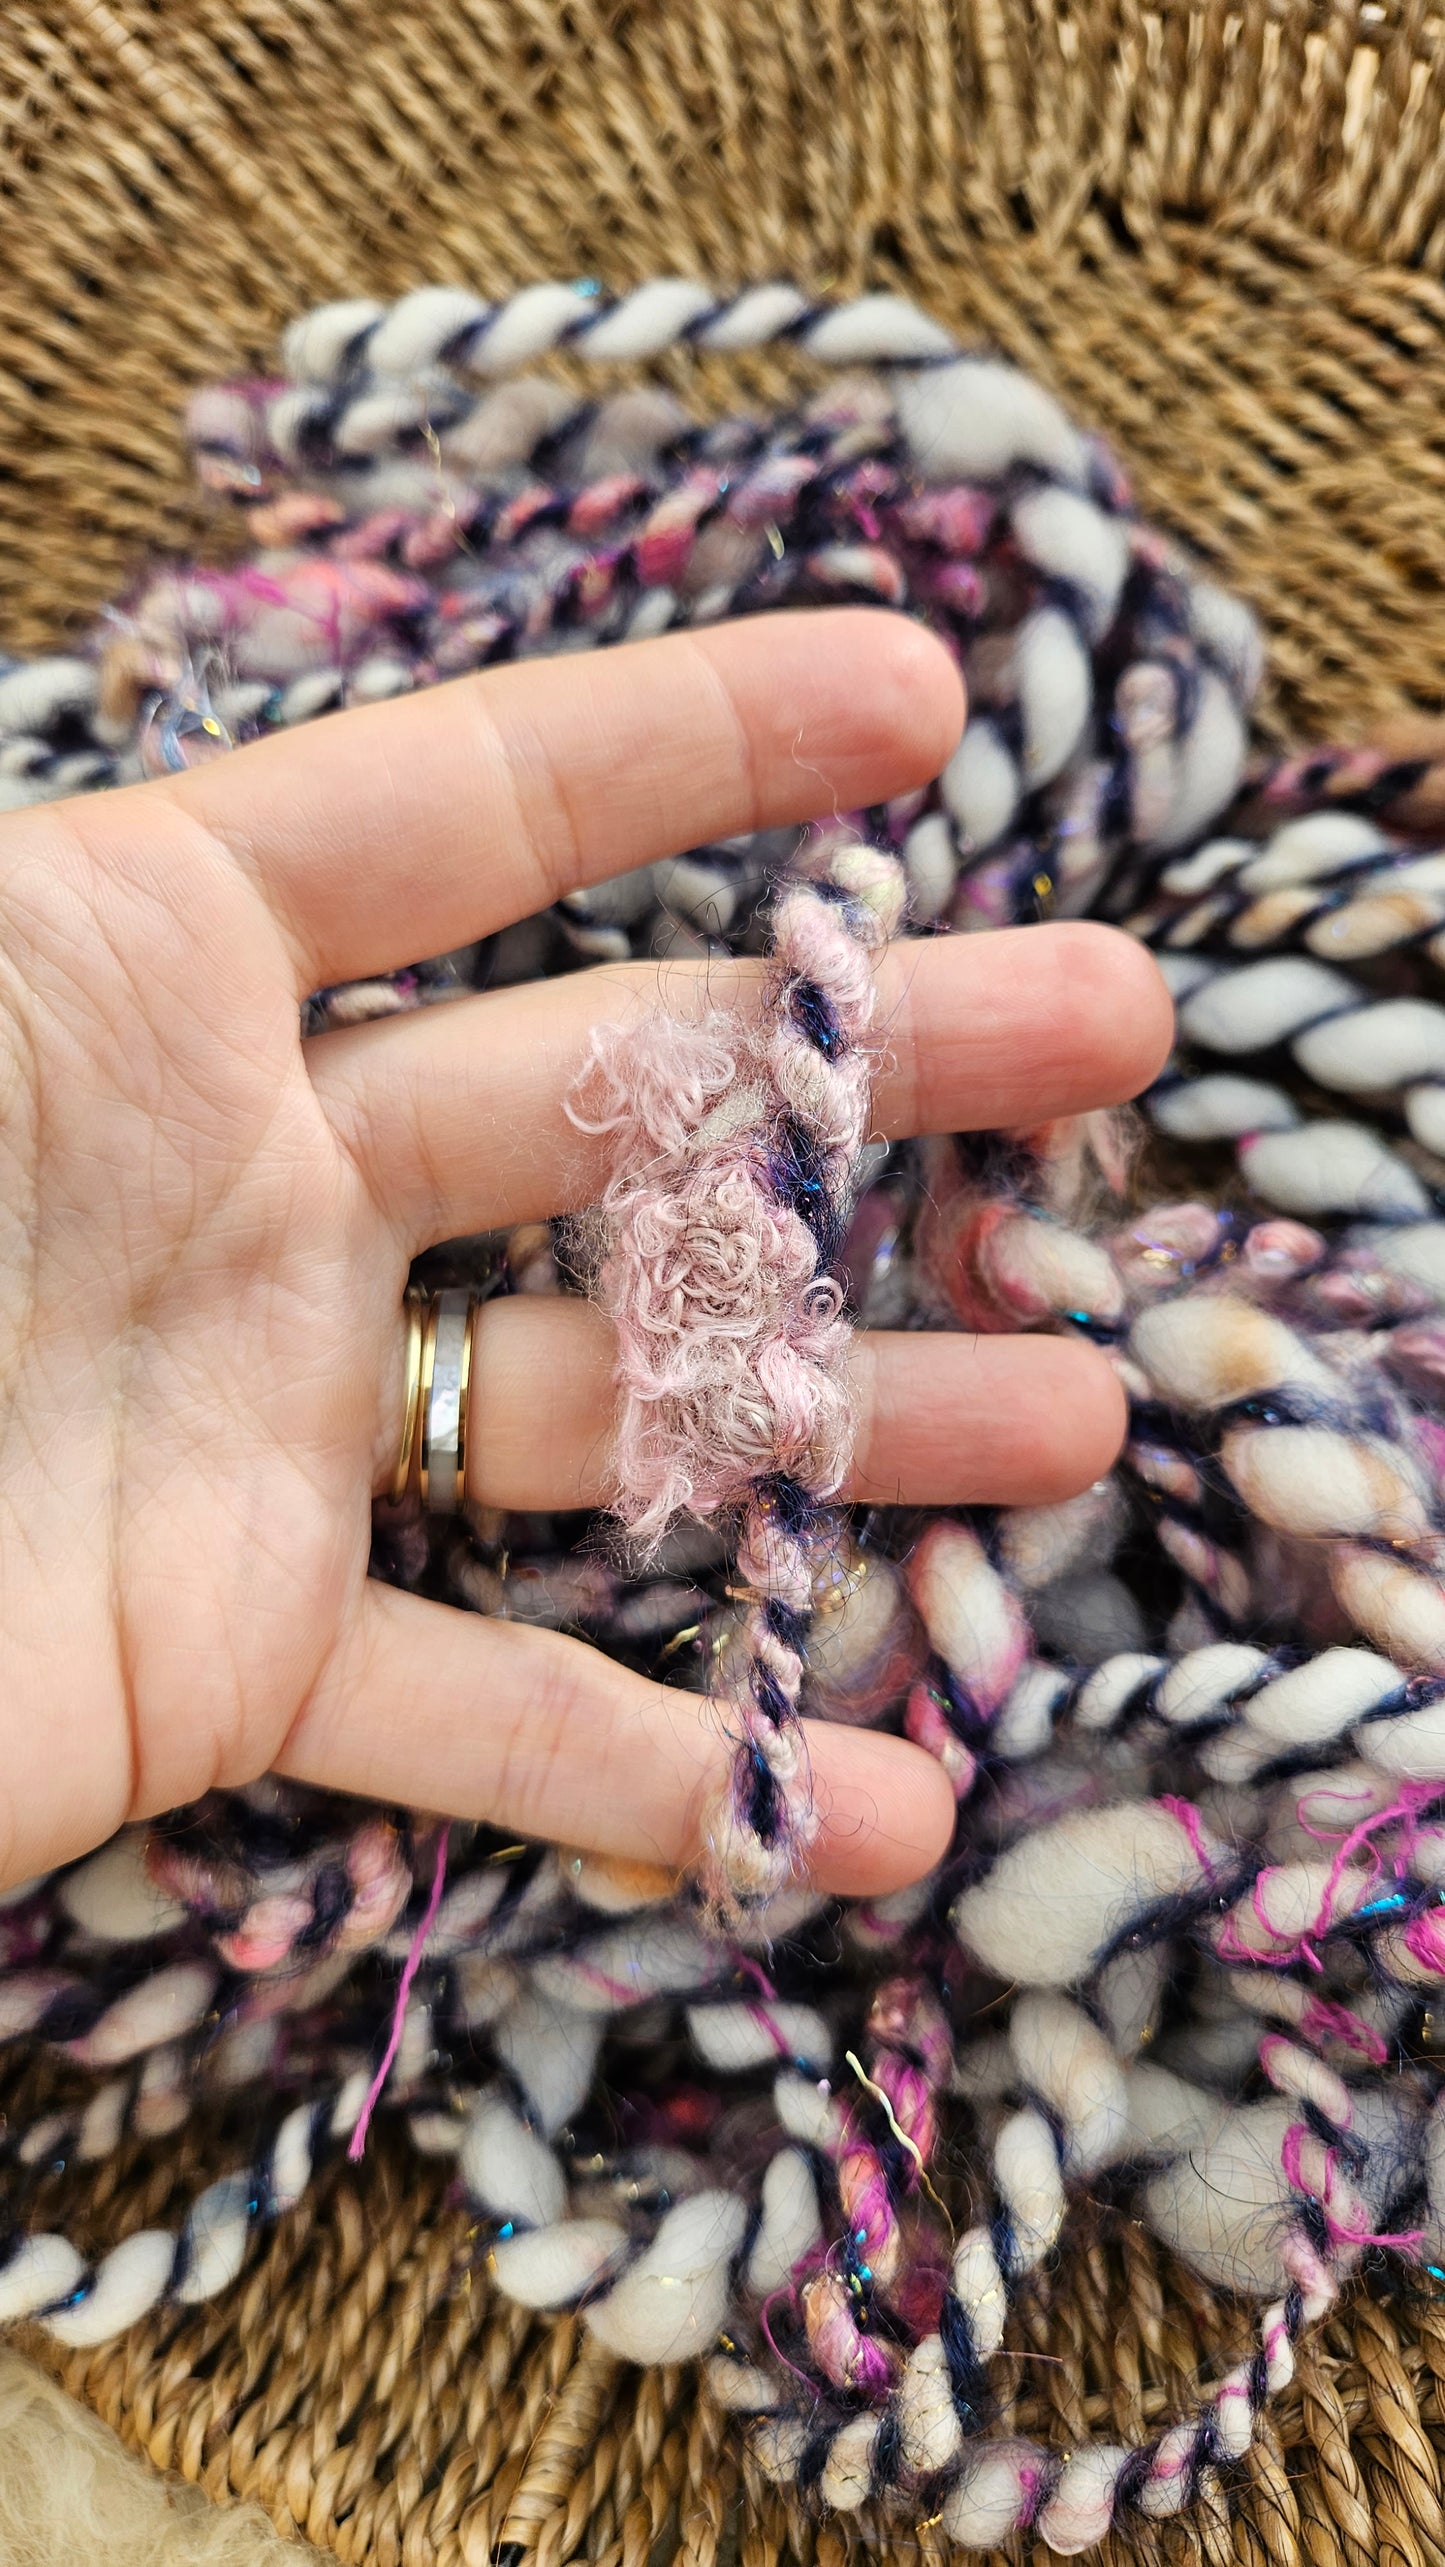 PROM DRESS - Handspun Bulky Wool Textured Art Yarn - 33 Yards 3.0 oz